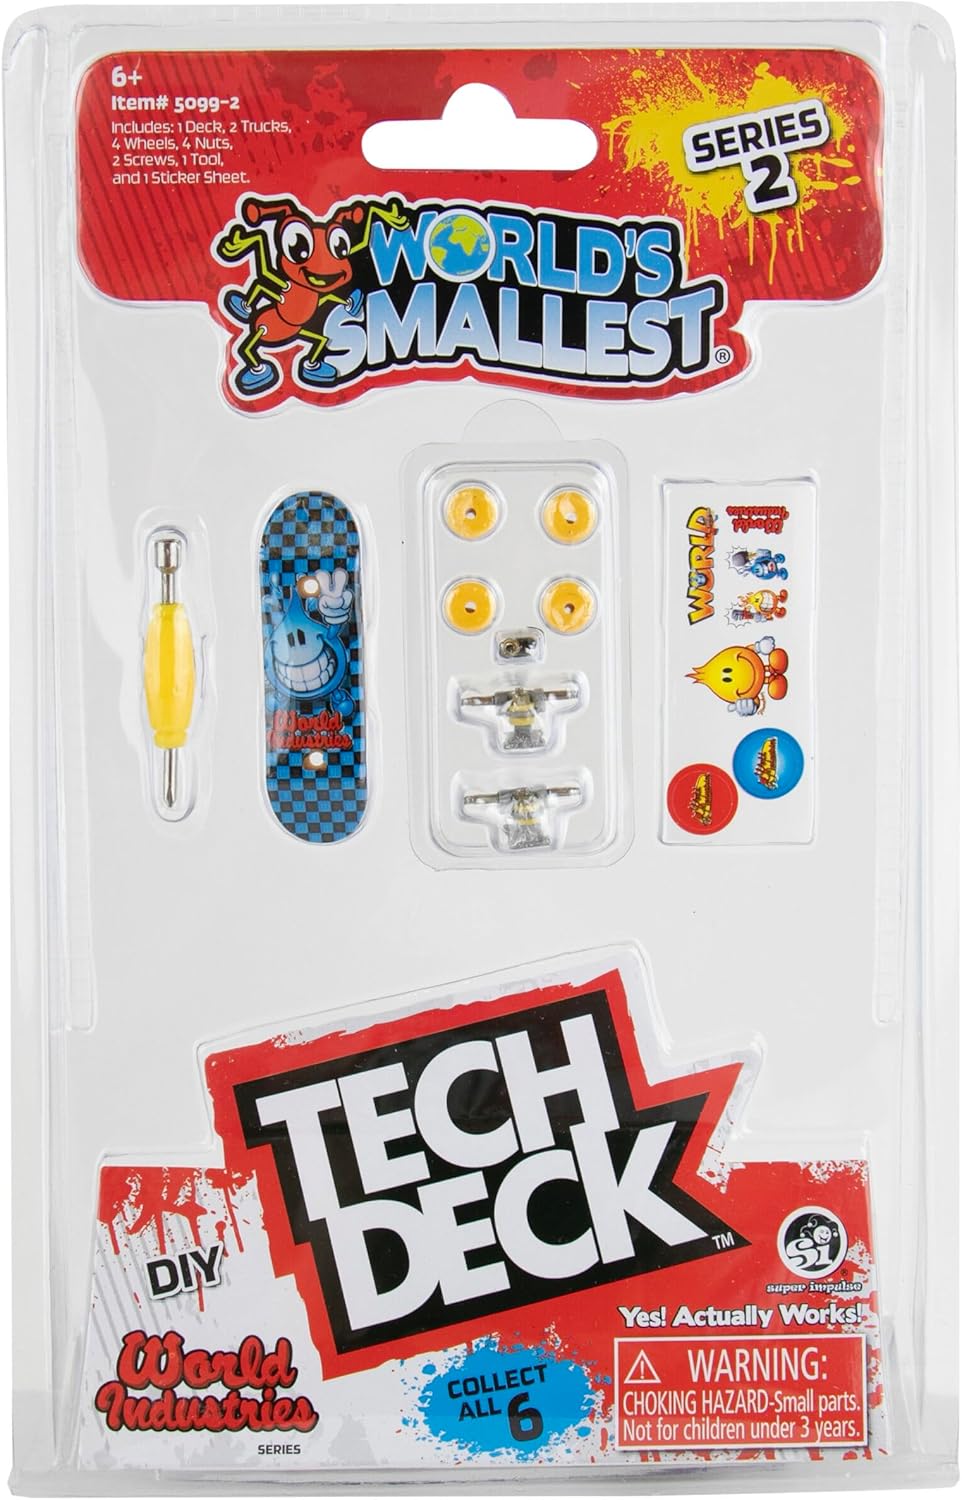 World's Smallest - Tech Deck Series 2 (Assorted Colors)